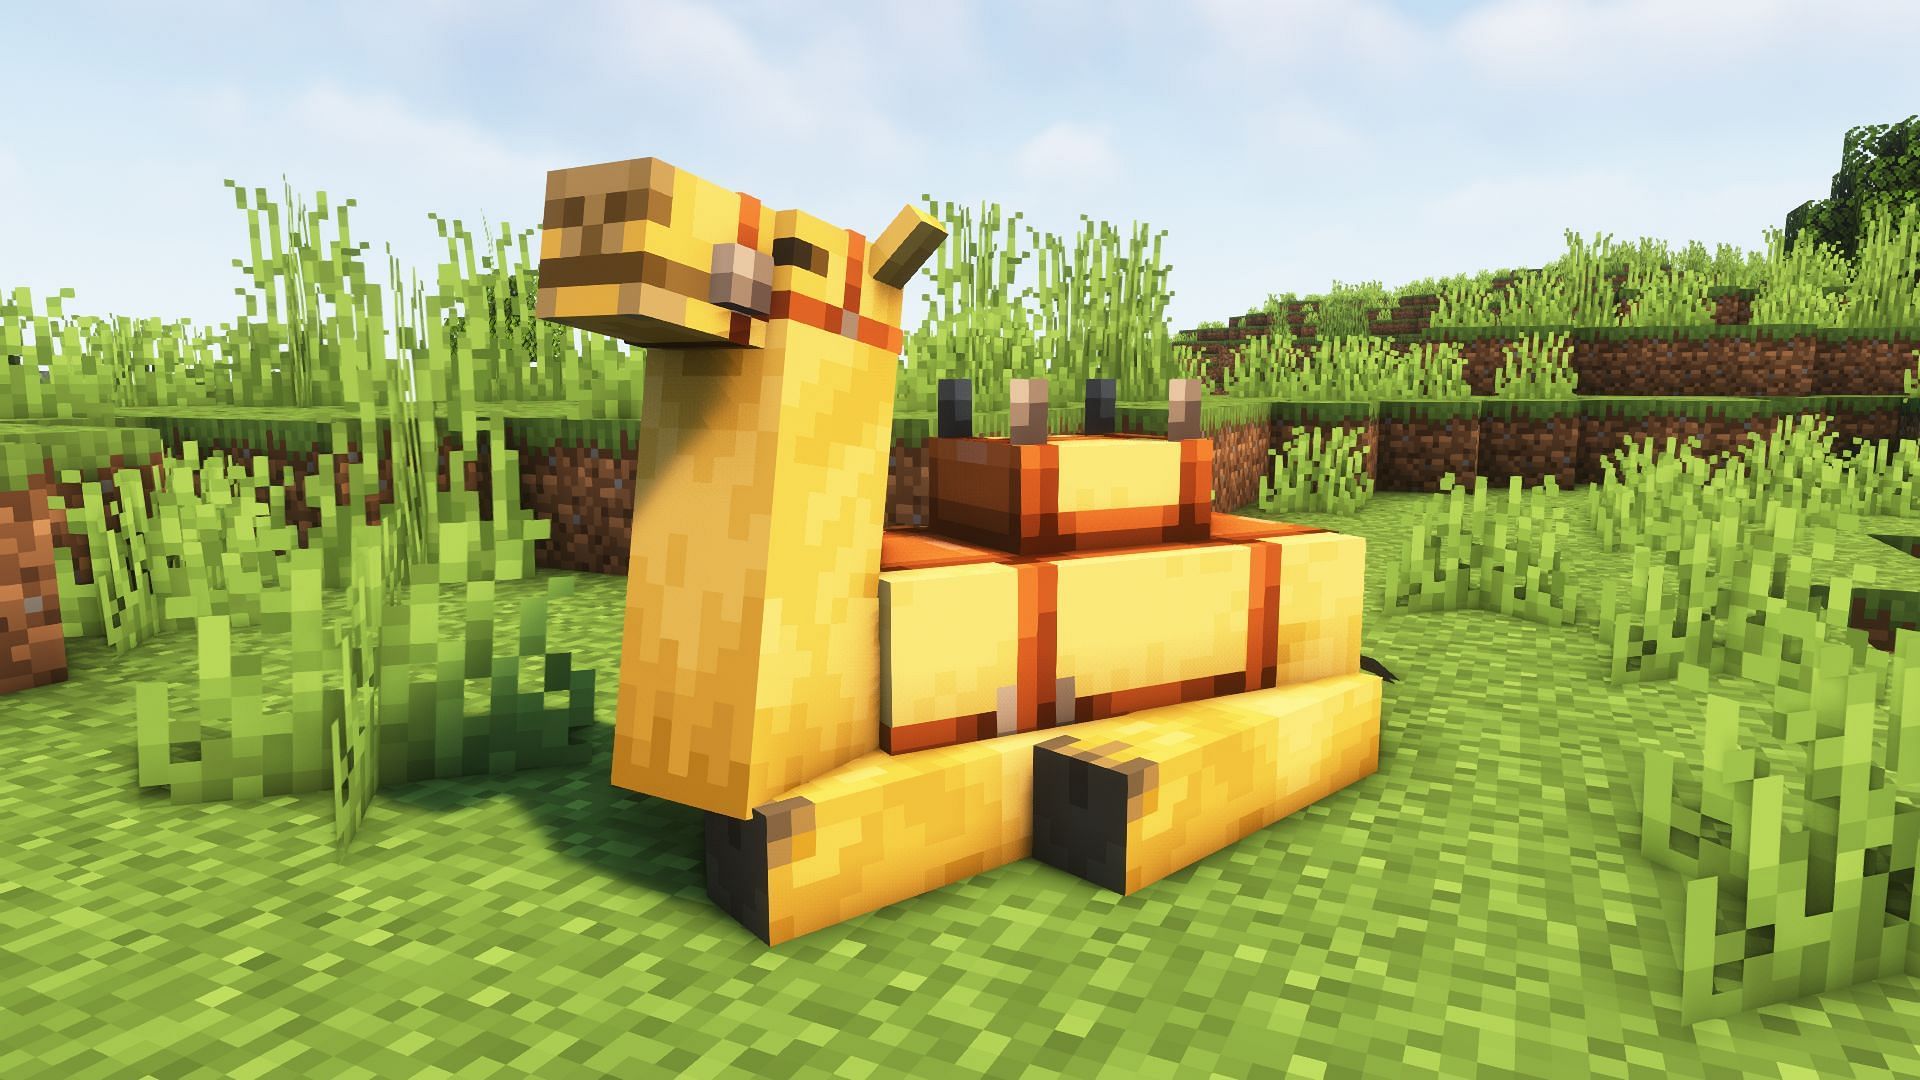 A camel in Minecraft (Image via Mojang)